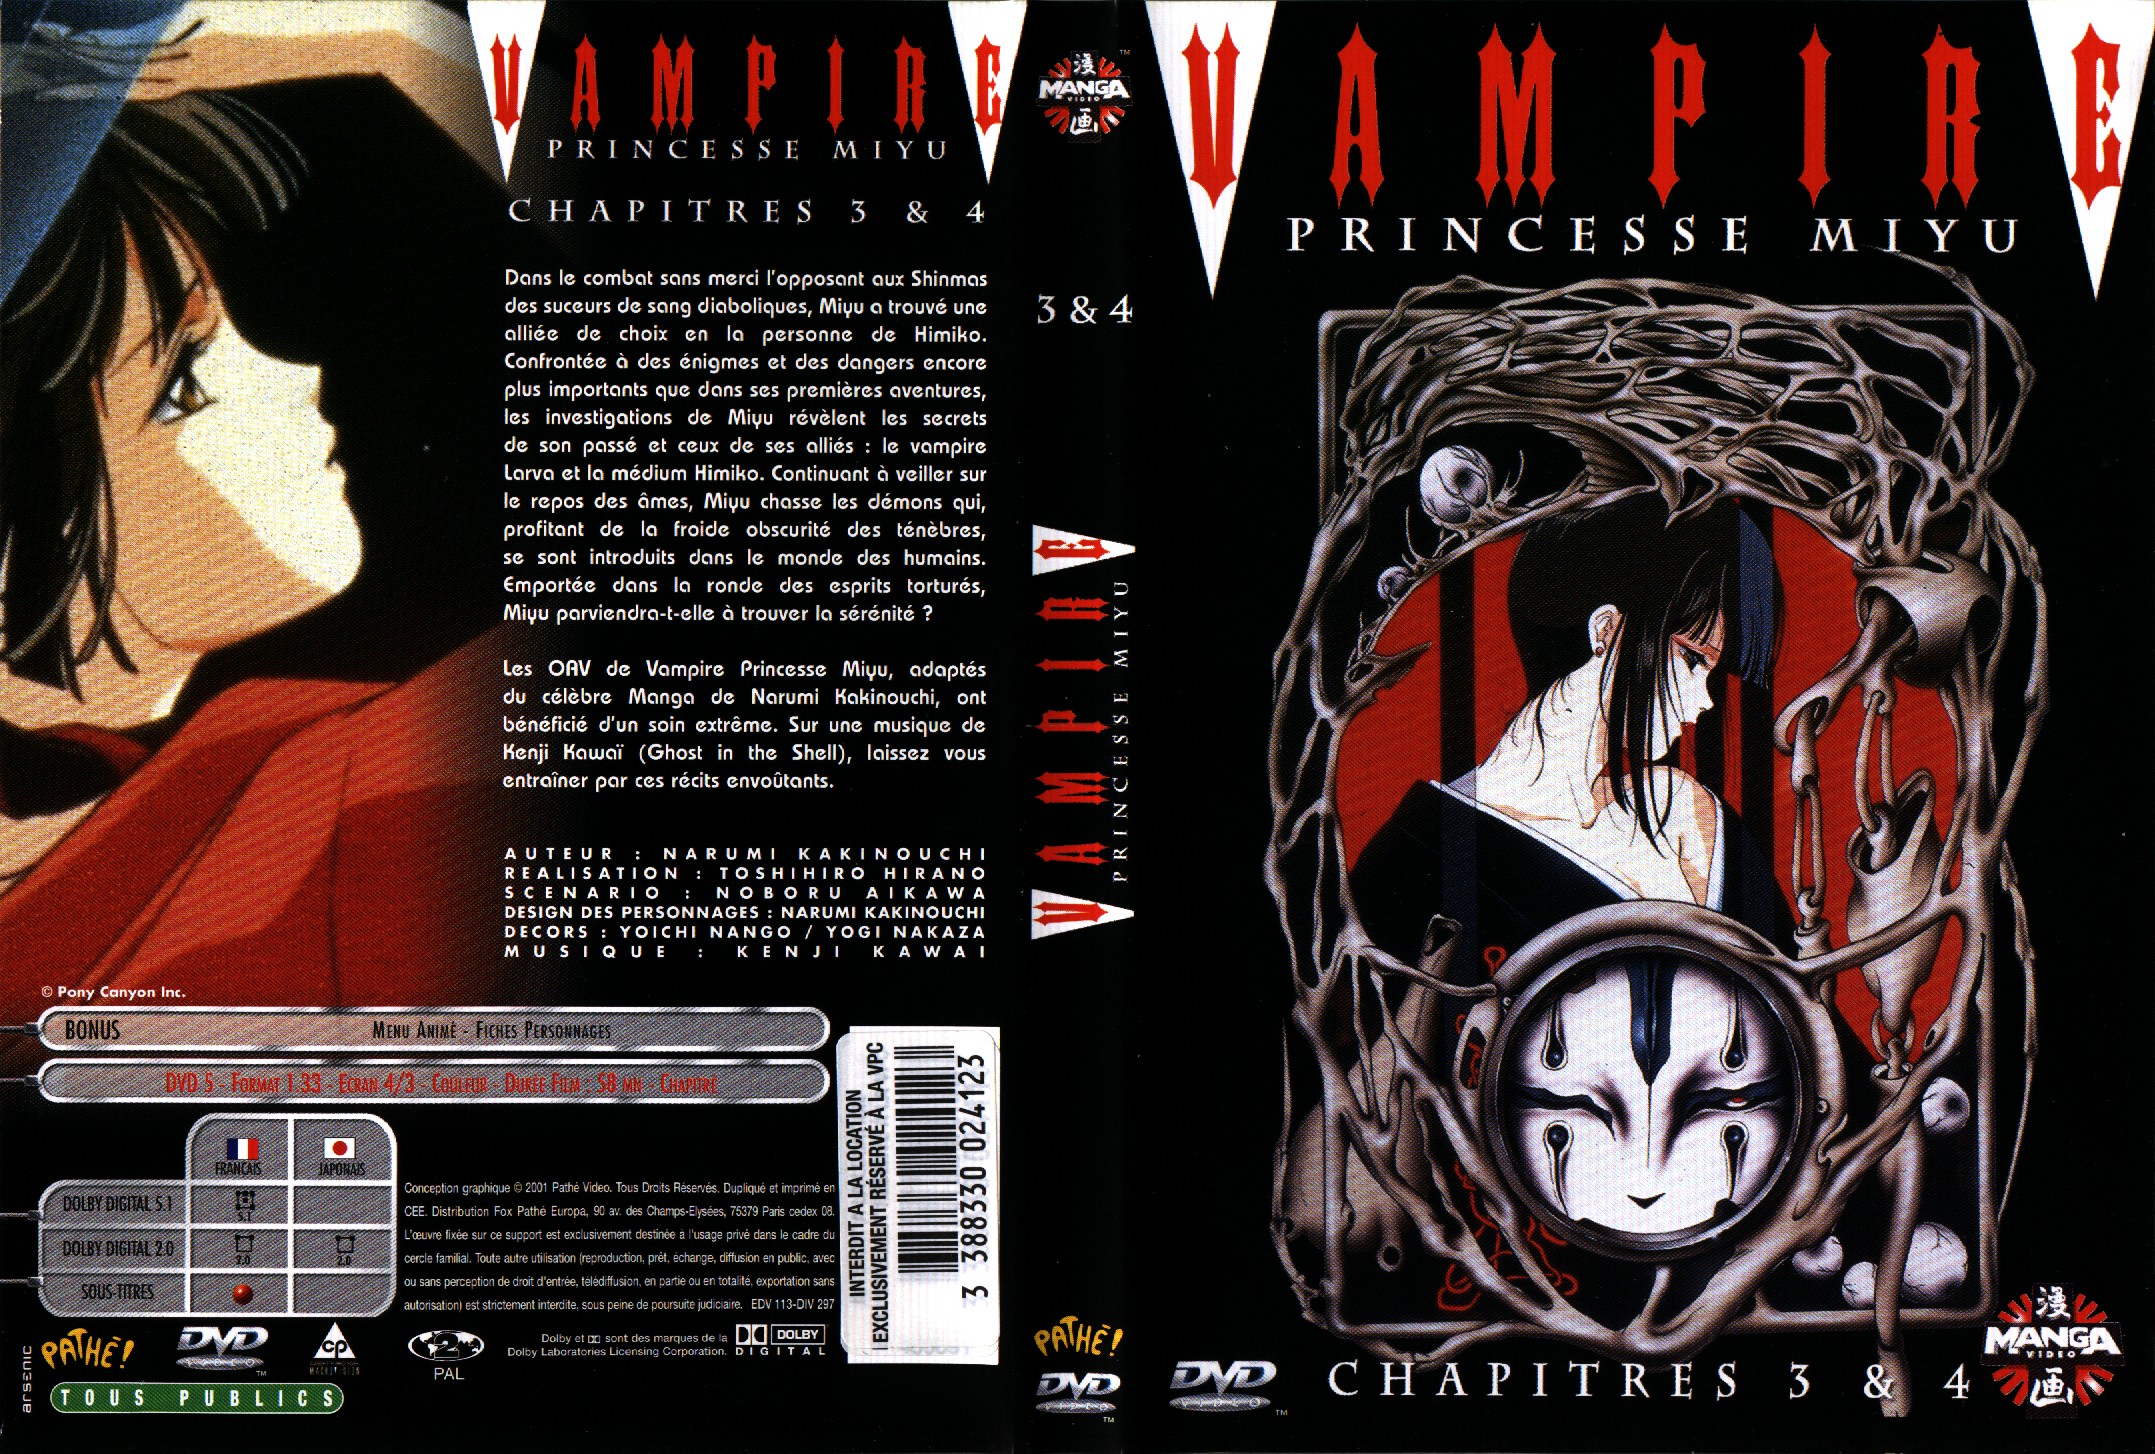 Jaquette DVD Vampire princess miyu vol 2